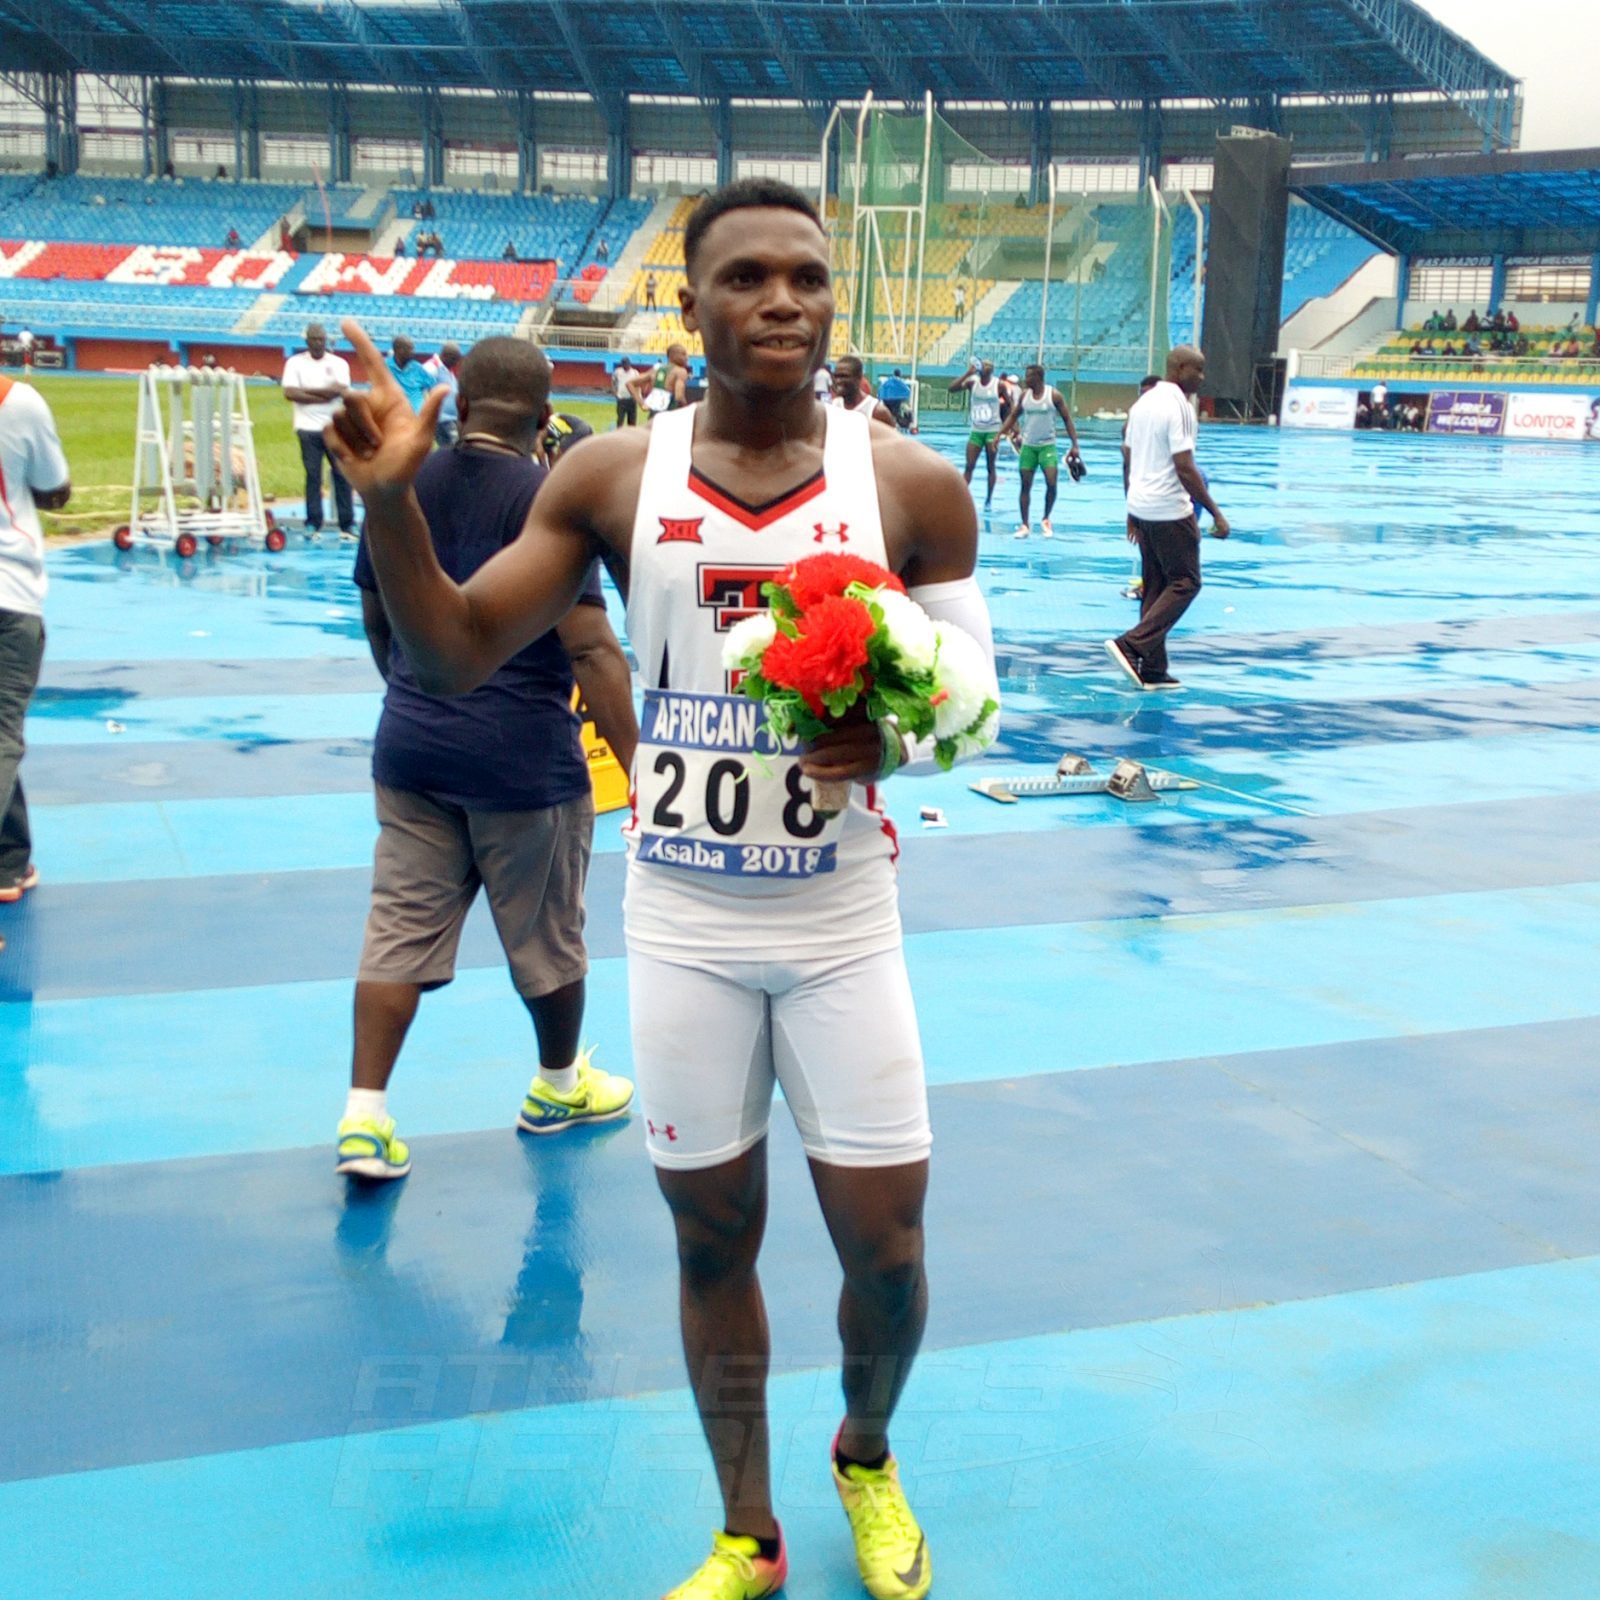 Divine Oduduru won the men's 100m in 10.40 secs. Ogho-Oghene Egwero finished 2nd in 10.46 and Enoch Adegoke 3rd in 10.52. / Photo credit: Naomi Peters for Athletics Africa